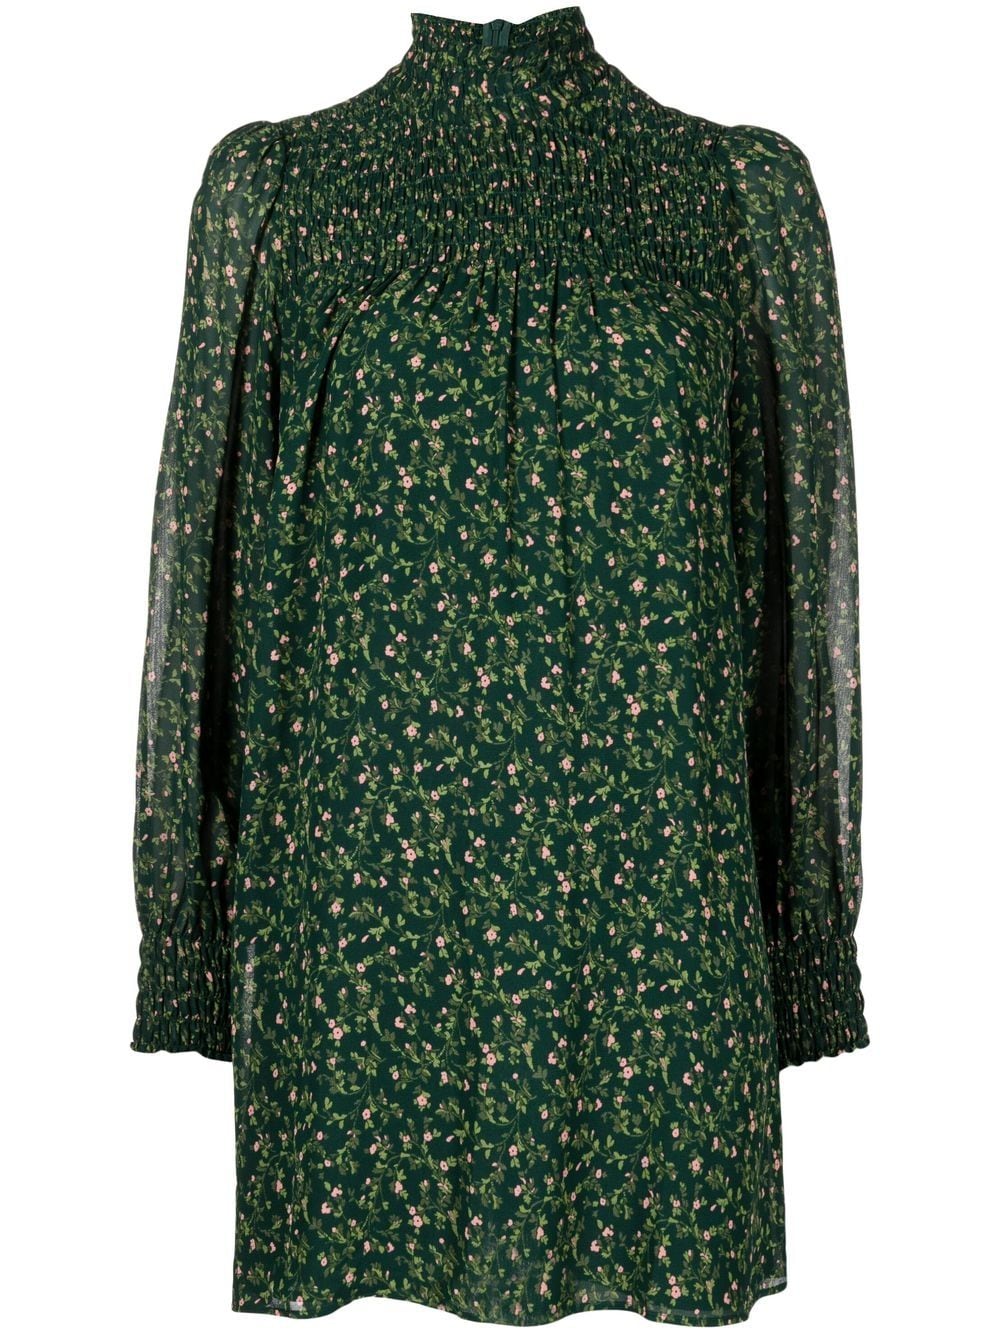 Reformation Brandi floral print dress - Green